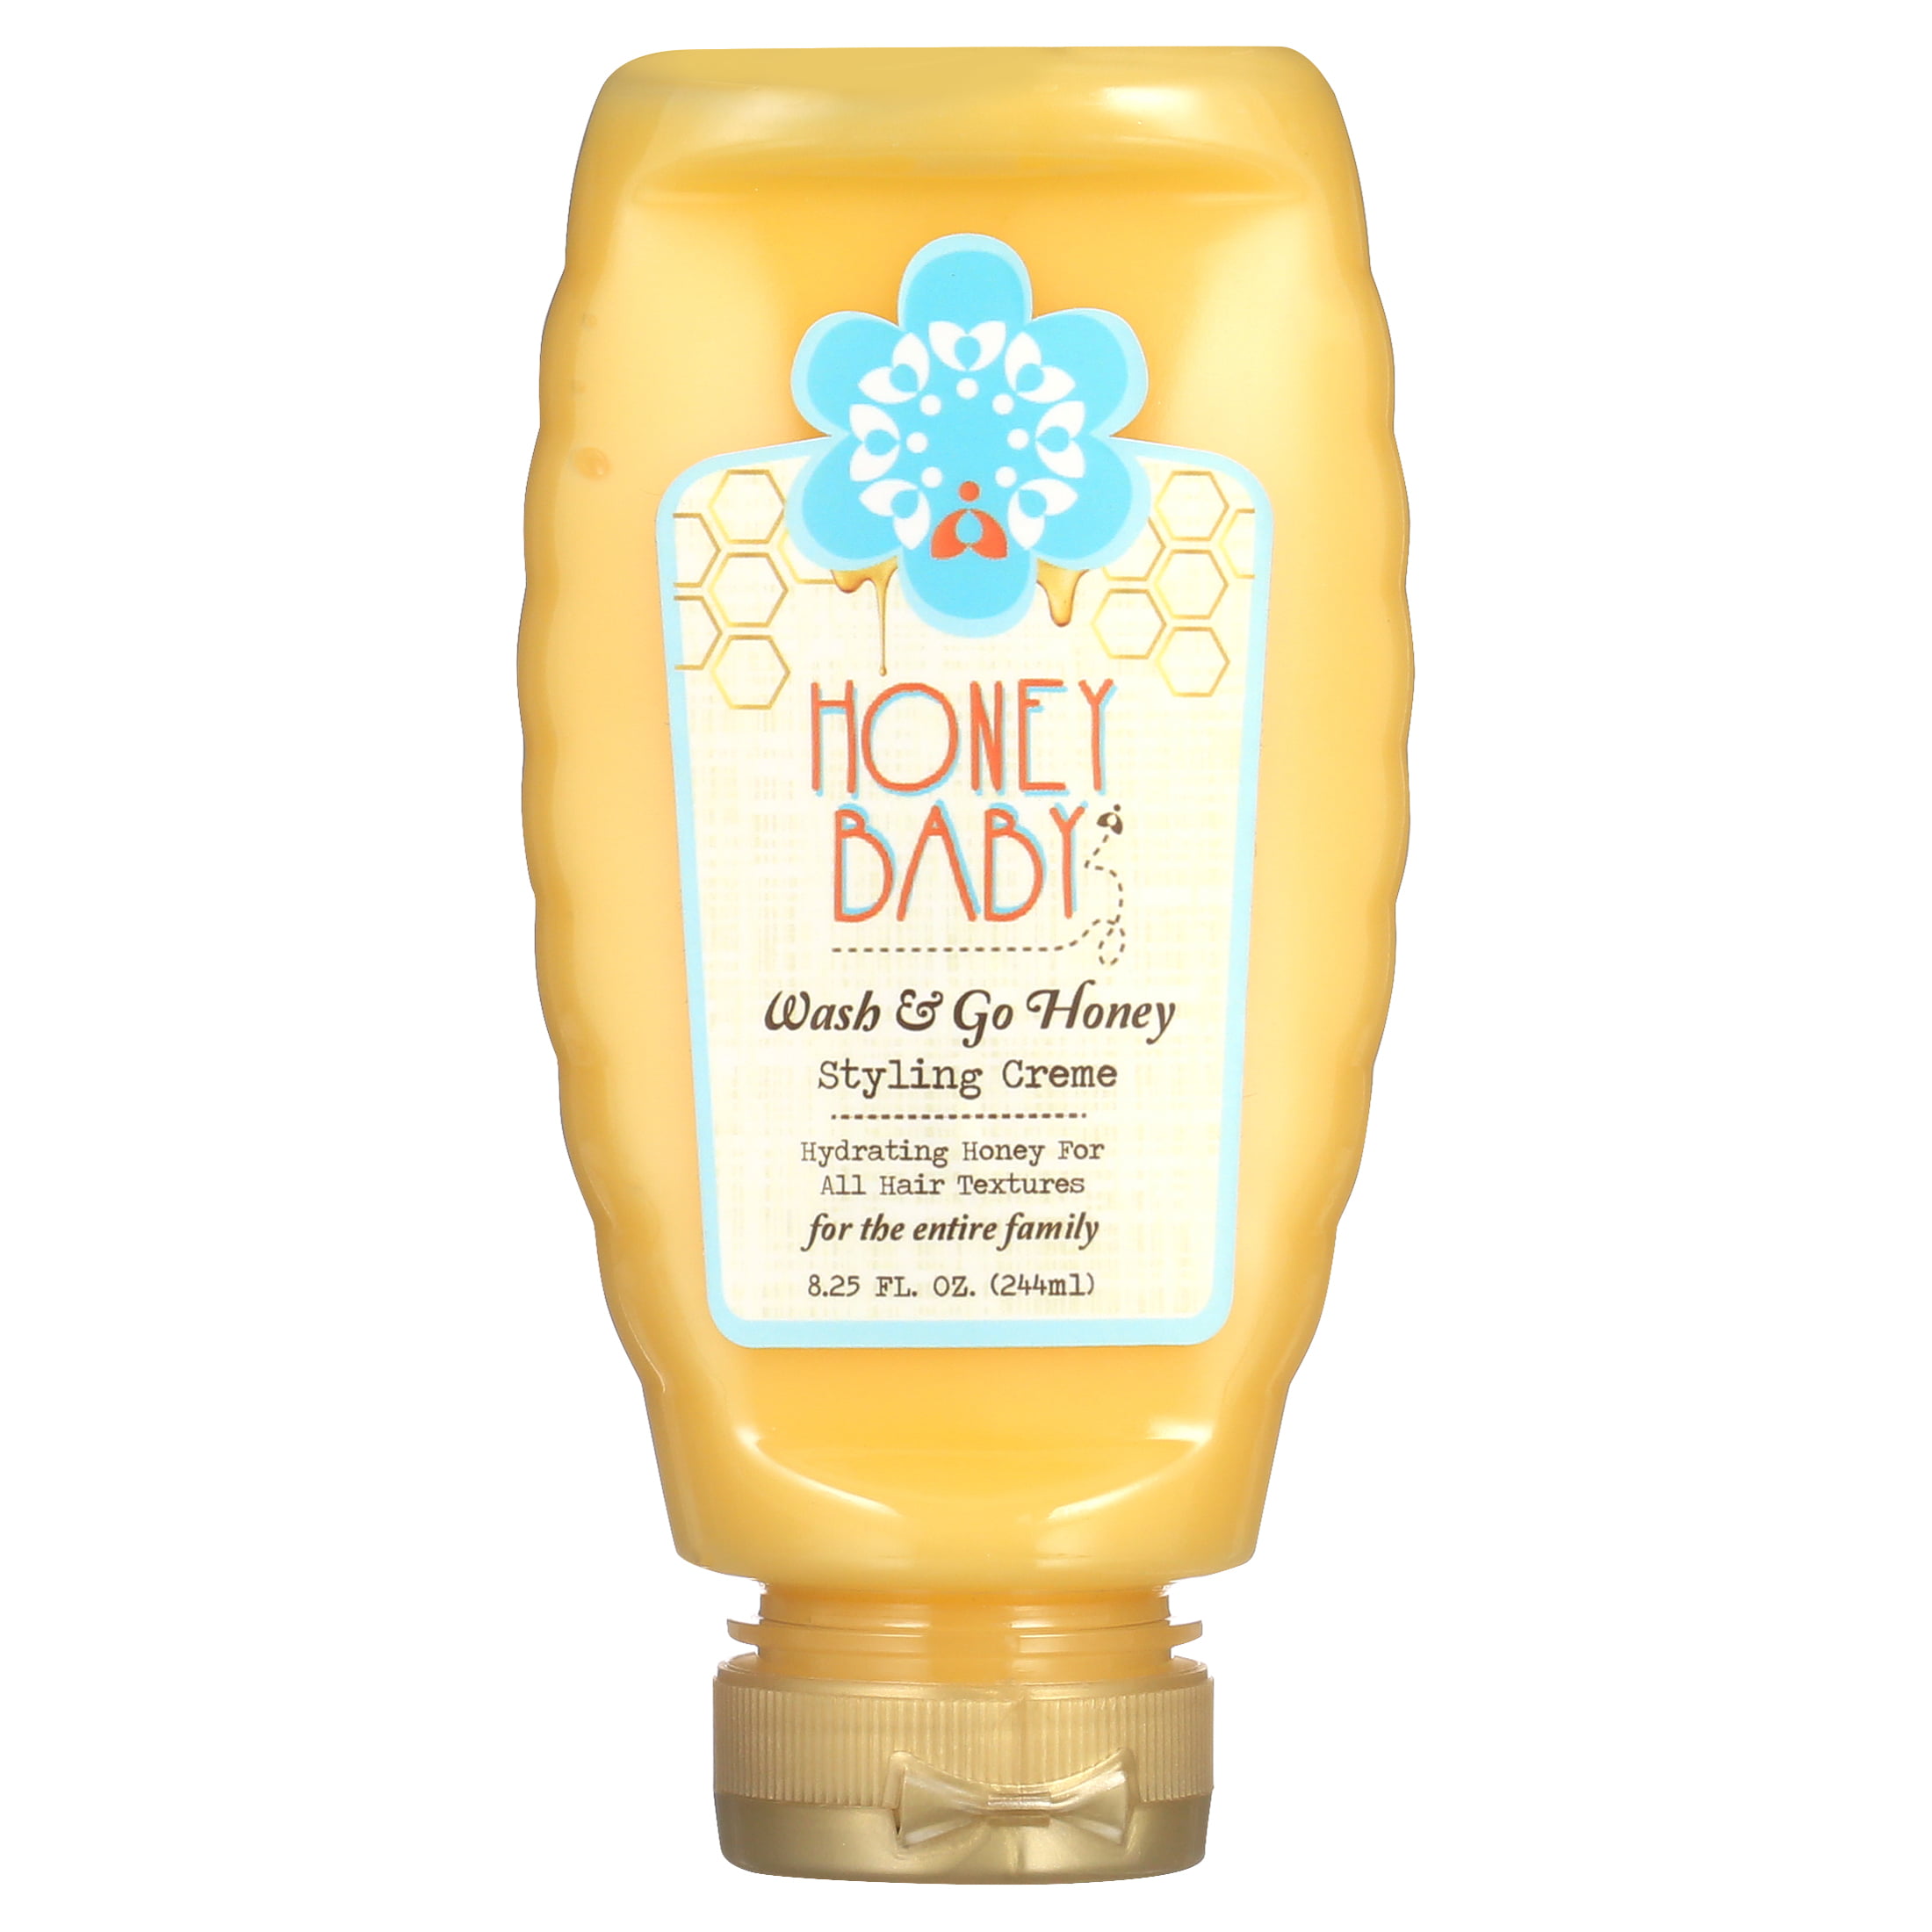 Honey Baby шампунь какие запахи есть. Attirance Colour Care Coconut & Sunflower Shampoo отзывы.